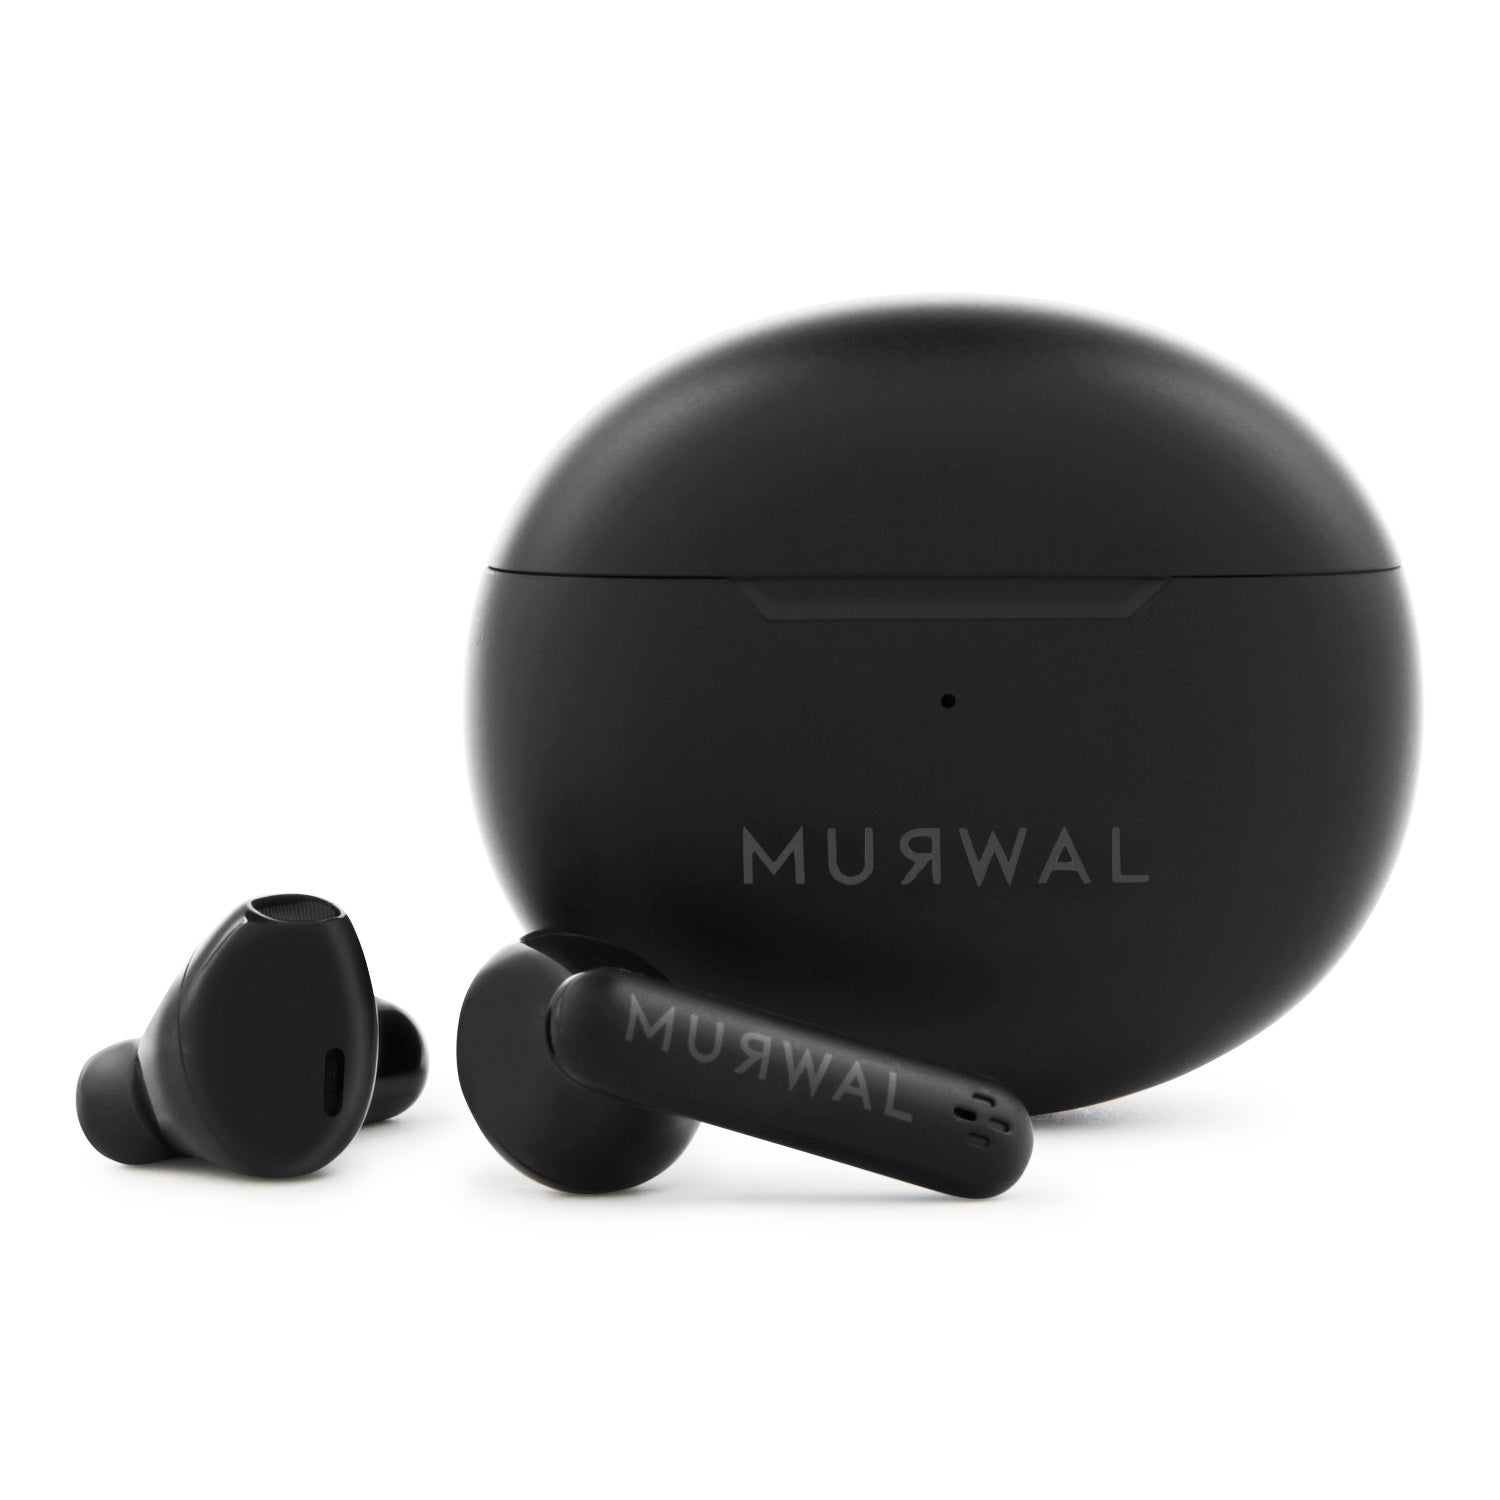 AURICULARES Bluetooth inalámbricos MURWAL GLOBE BLACK EDITION con microfono  20 Horas de reproducción, IPX5 Impermeable, reducción